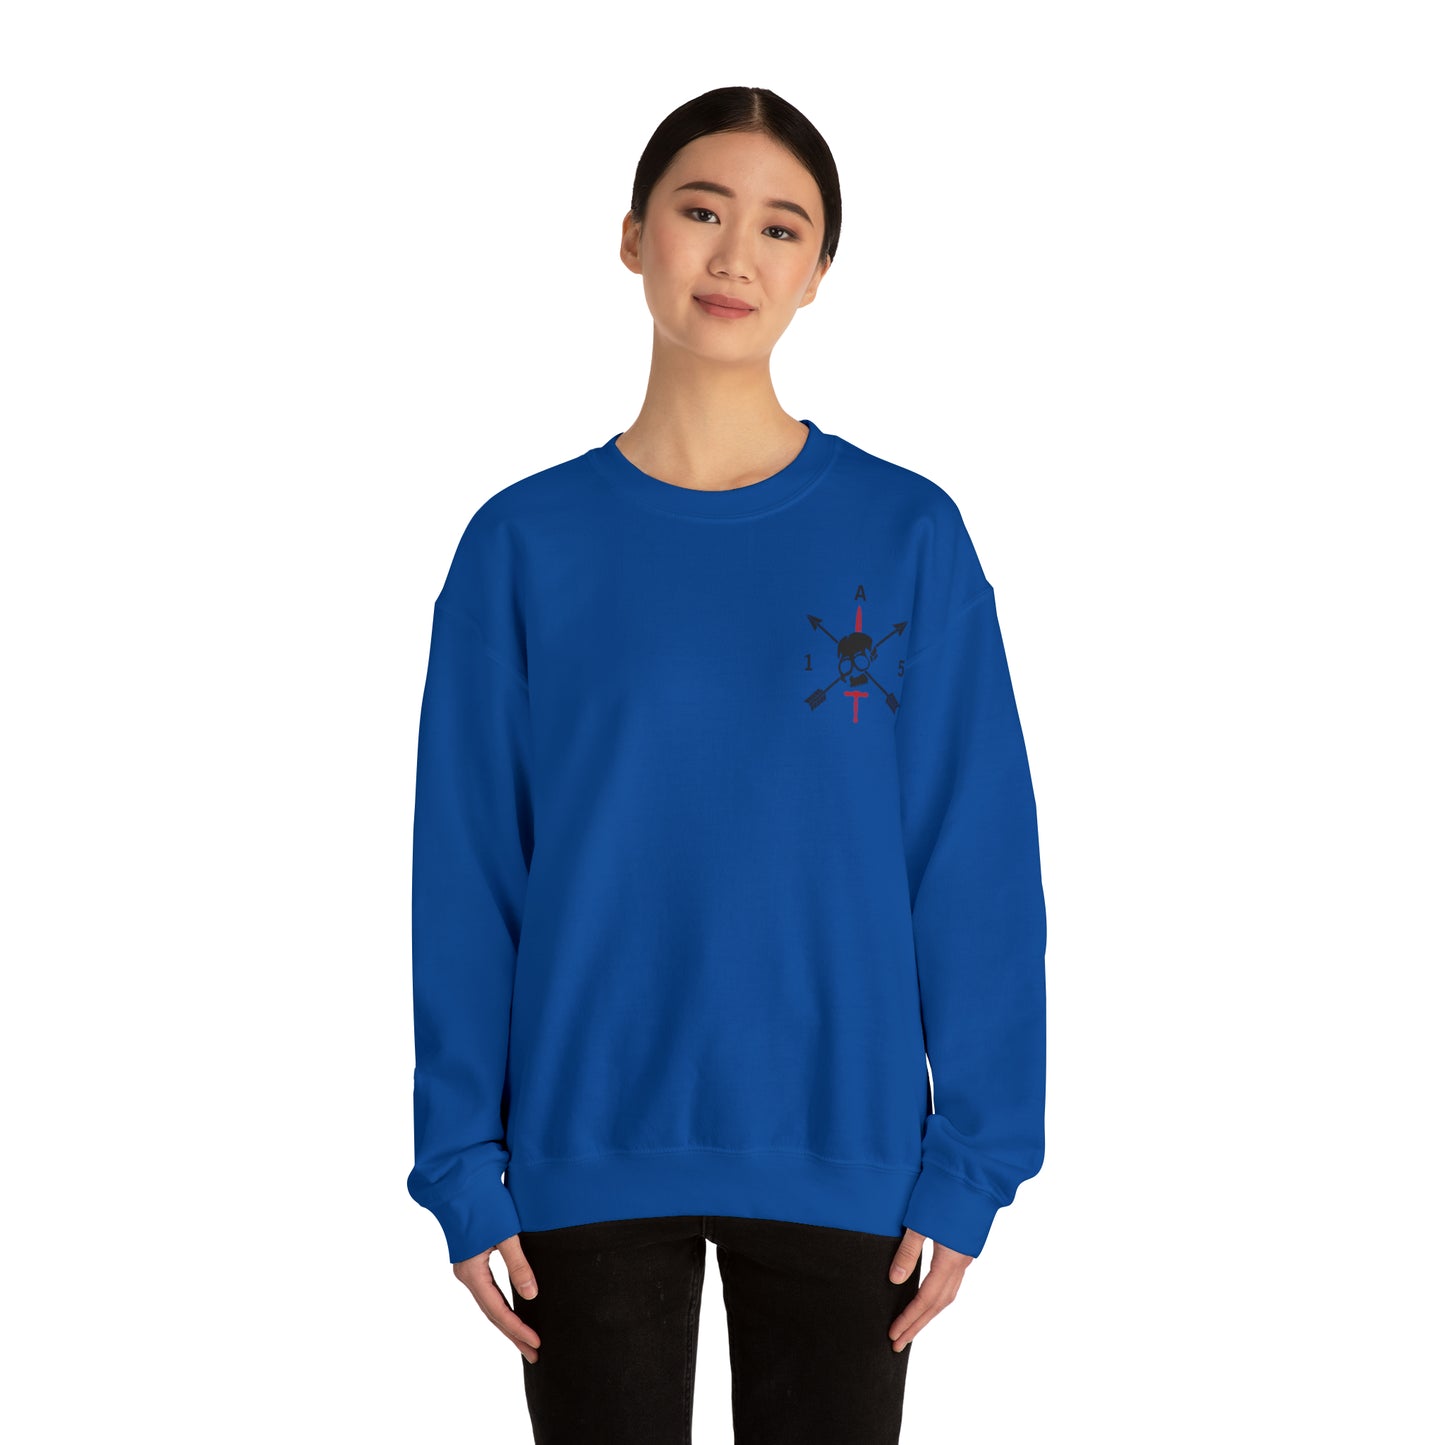 Front Only- Crewneck Sweatshirt